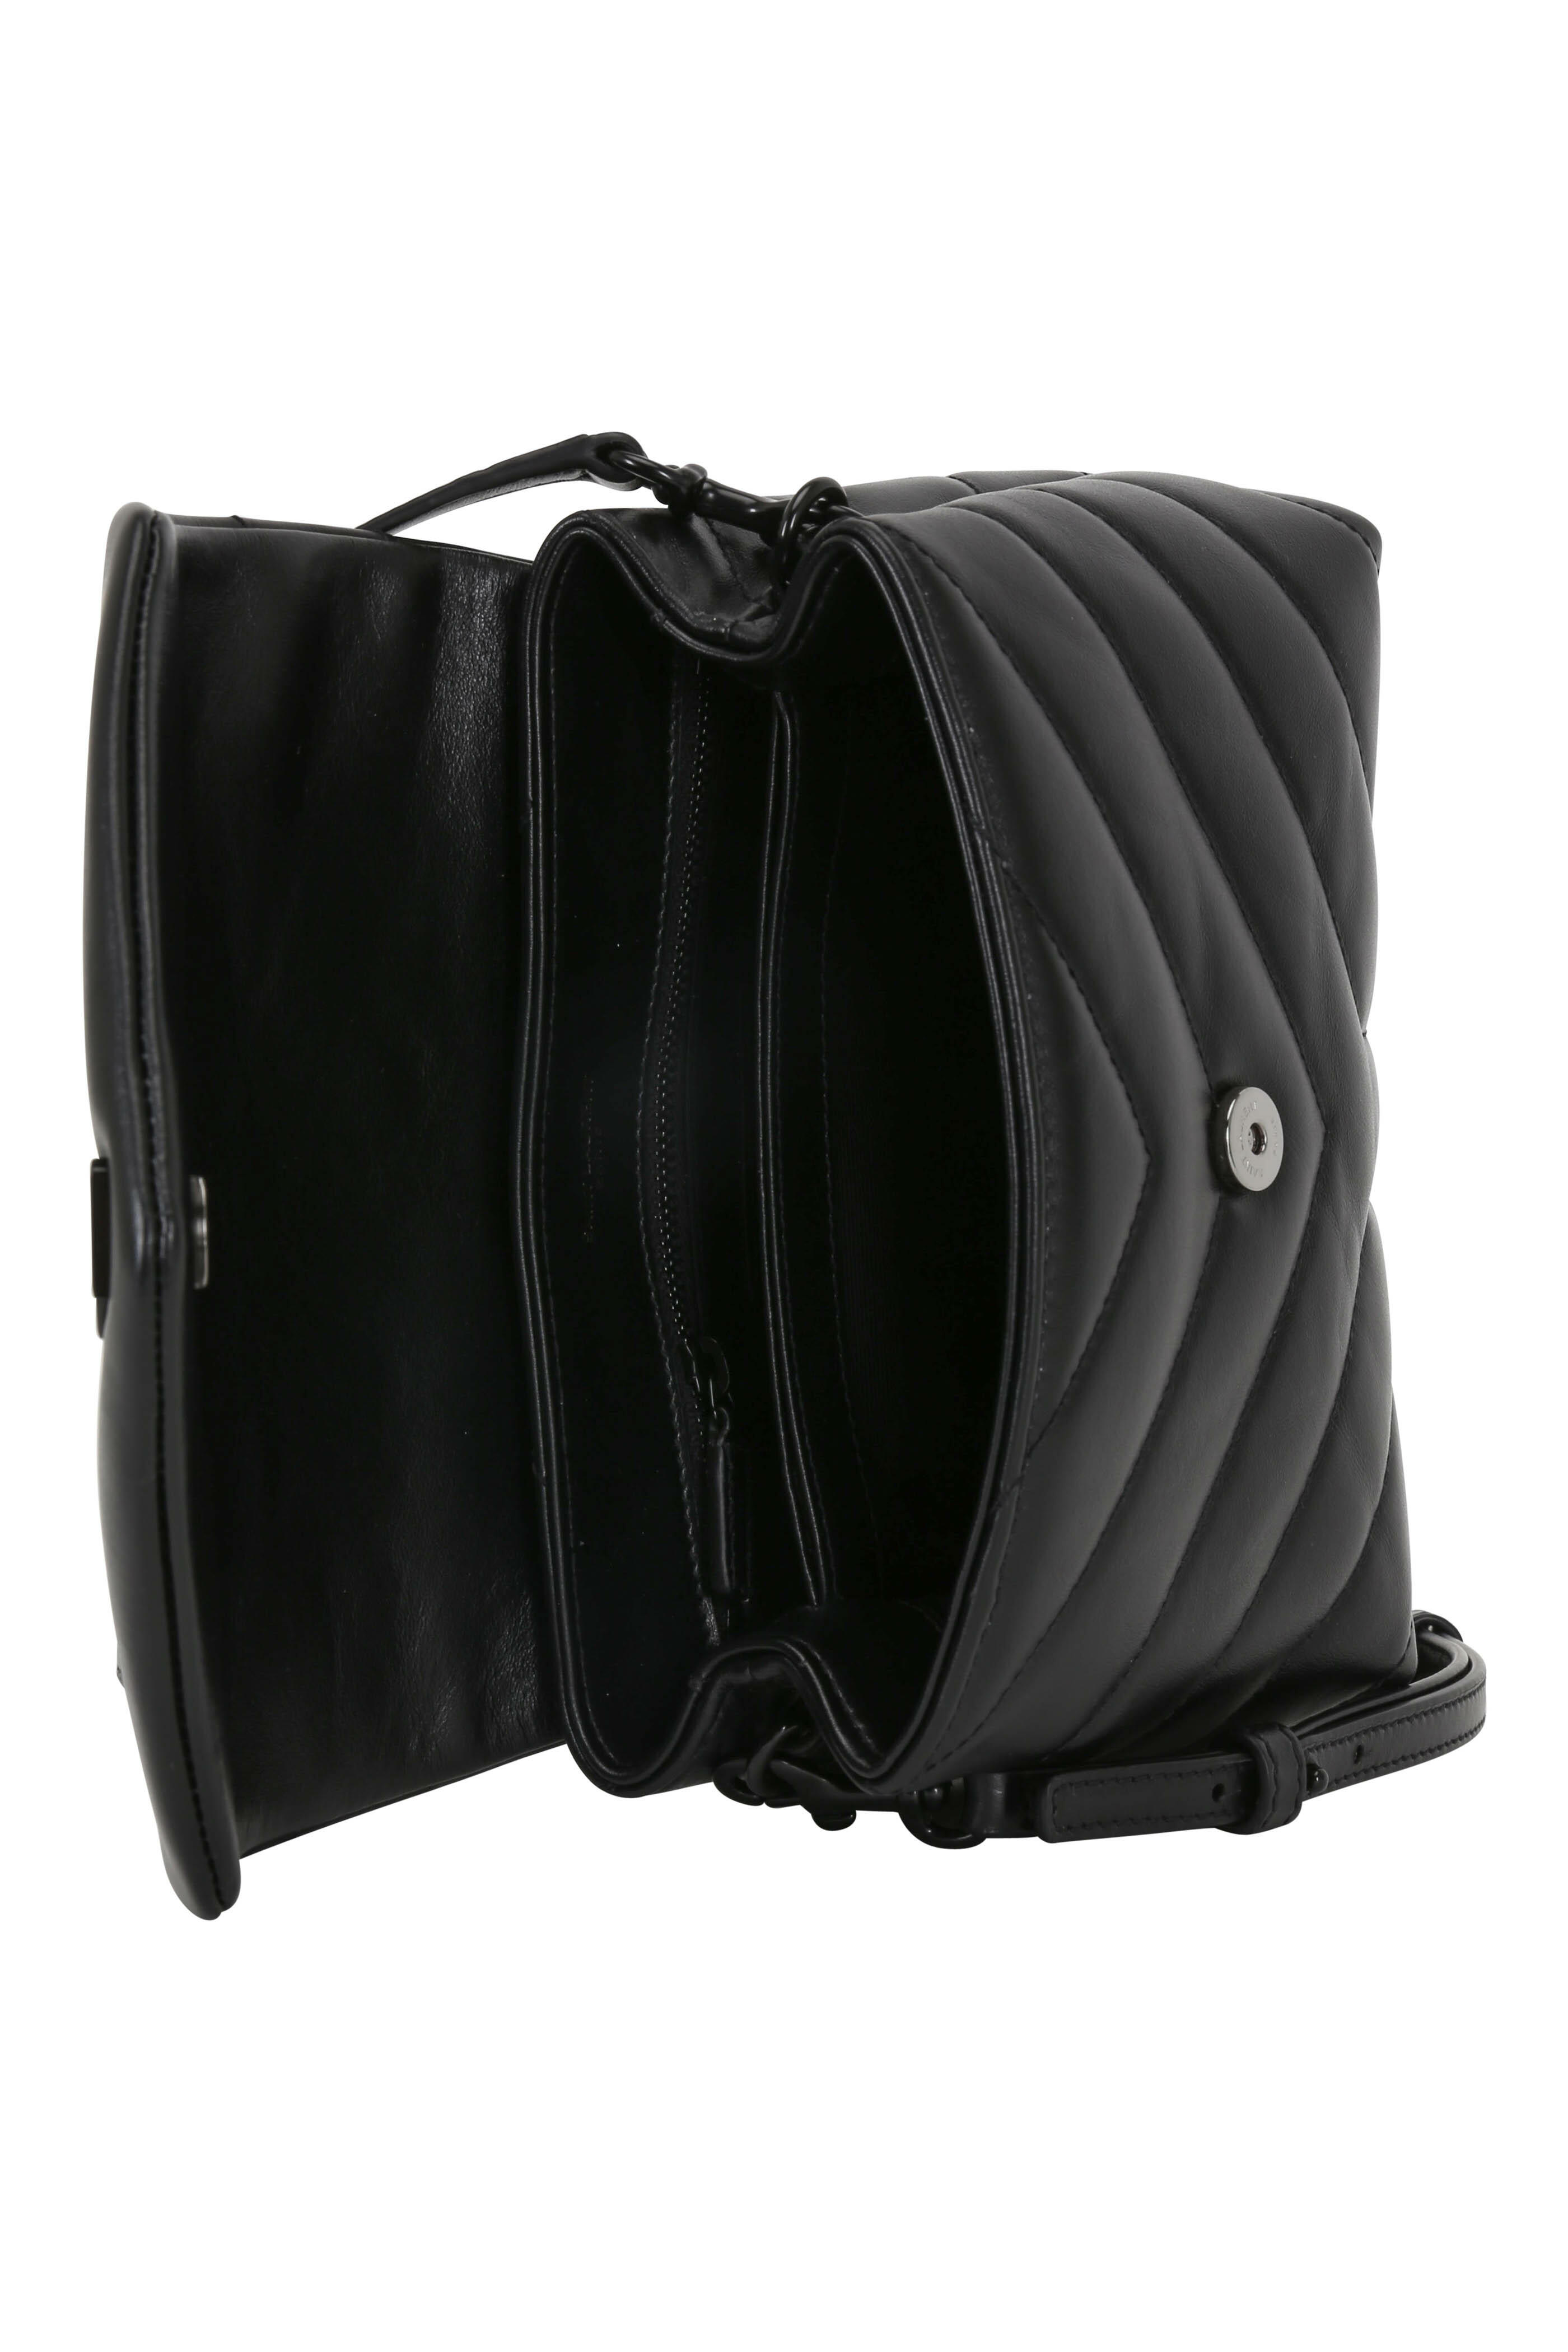 Saint Laurent Toy Ysl Quilted Puffer Chain Shoulder Bag, Black, Women's, Handbags & Purses Crossbody Bags & Camera Bags